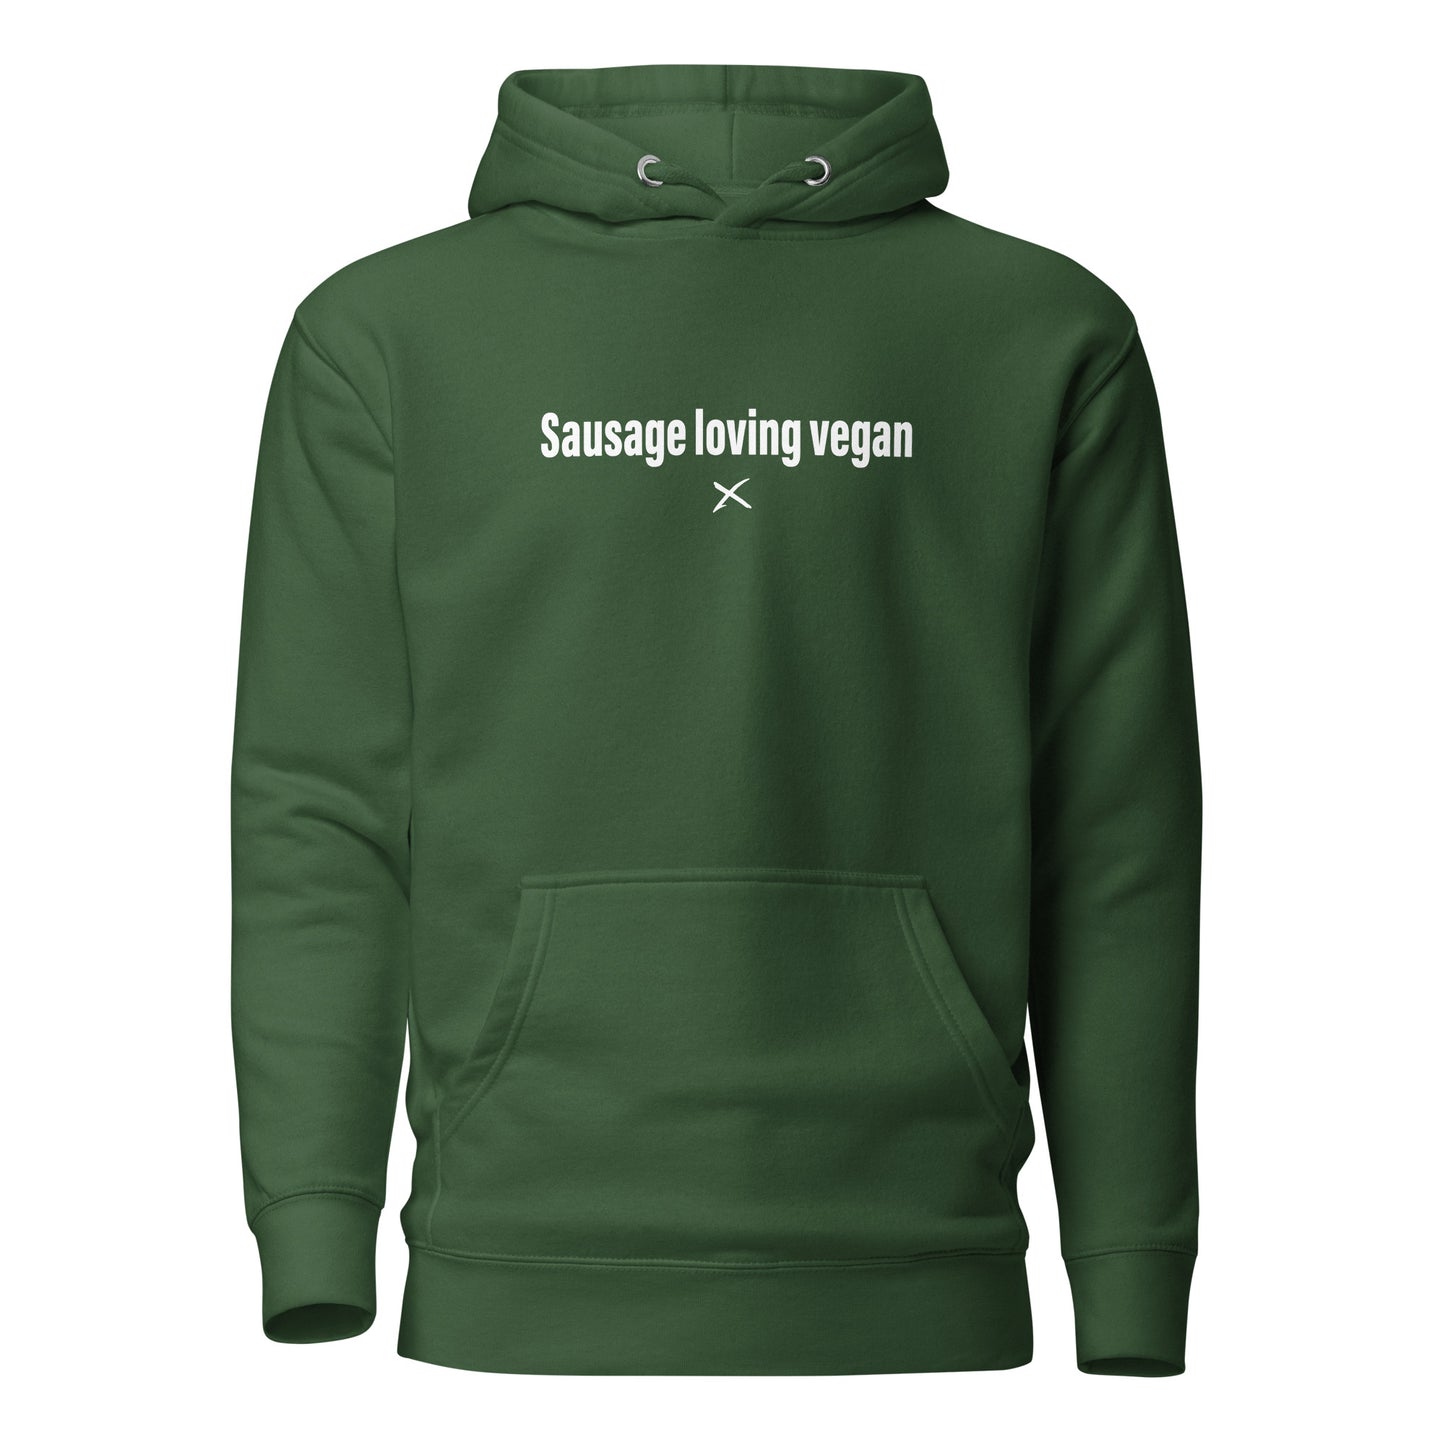 Sausage loving vegan - Hoodie